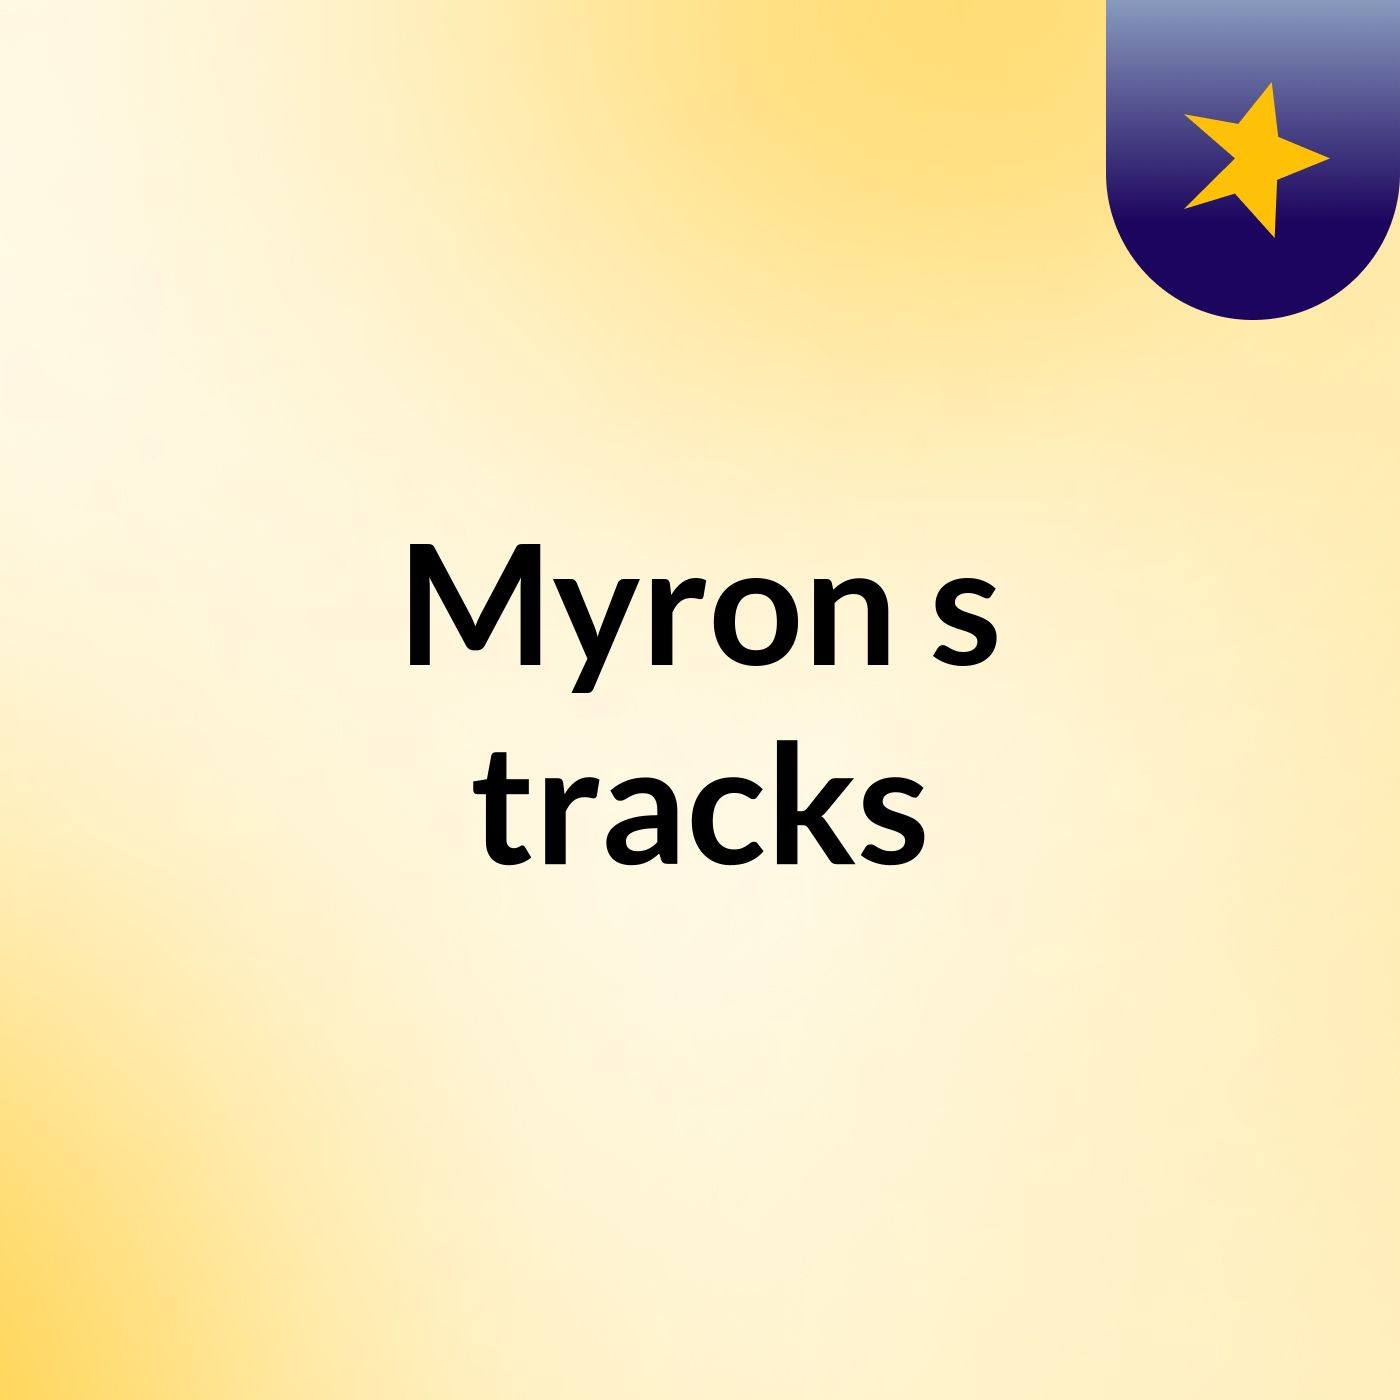 Myron's tracks